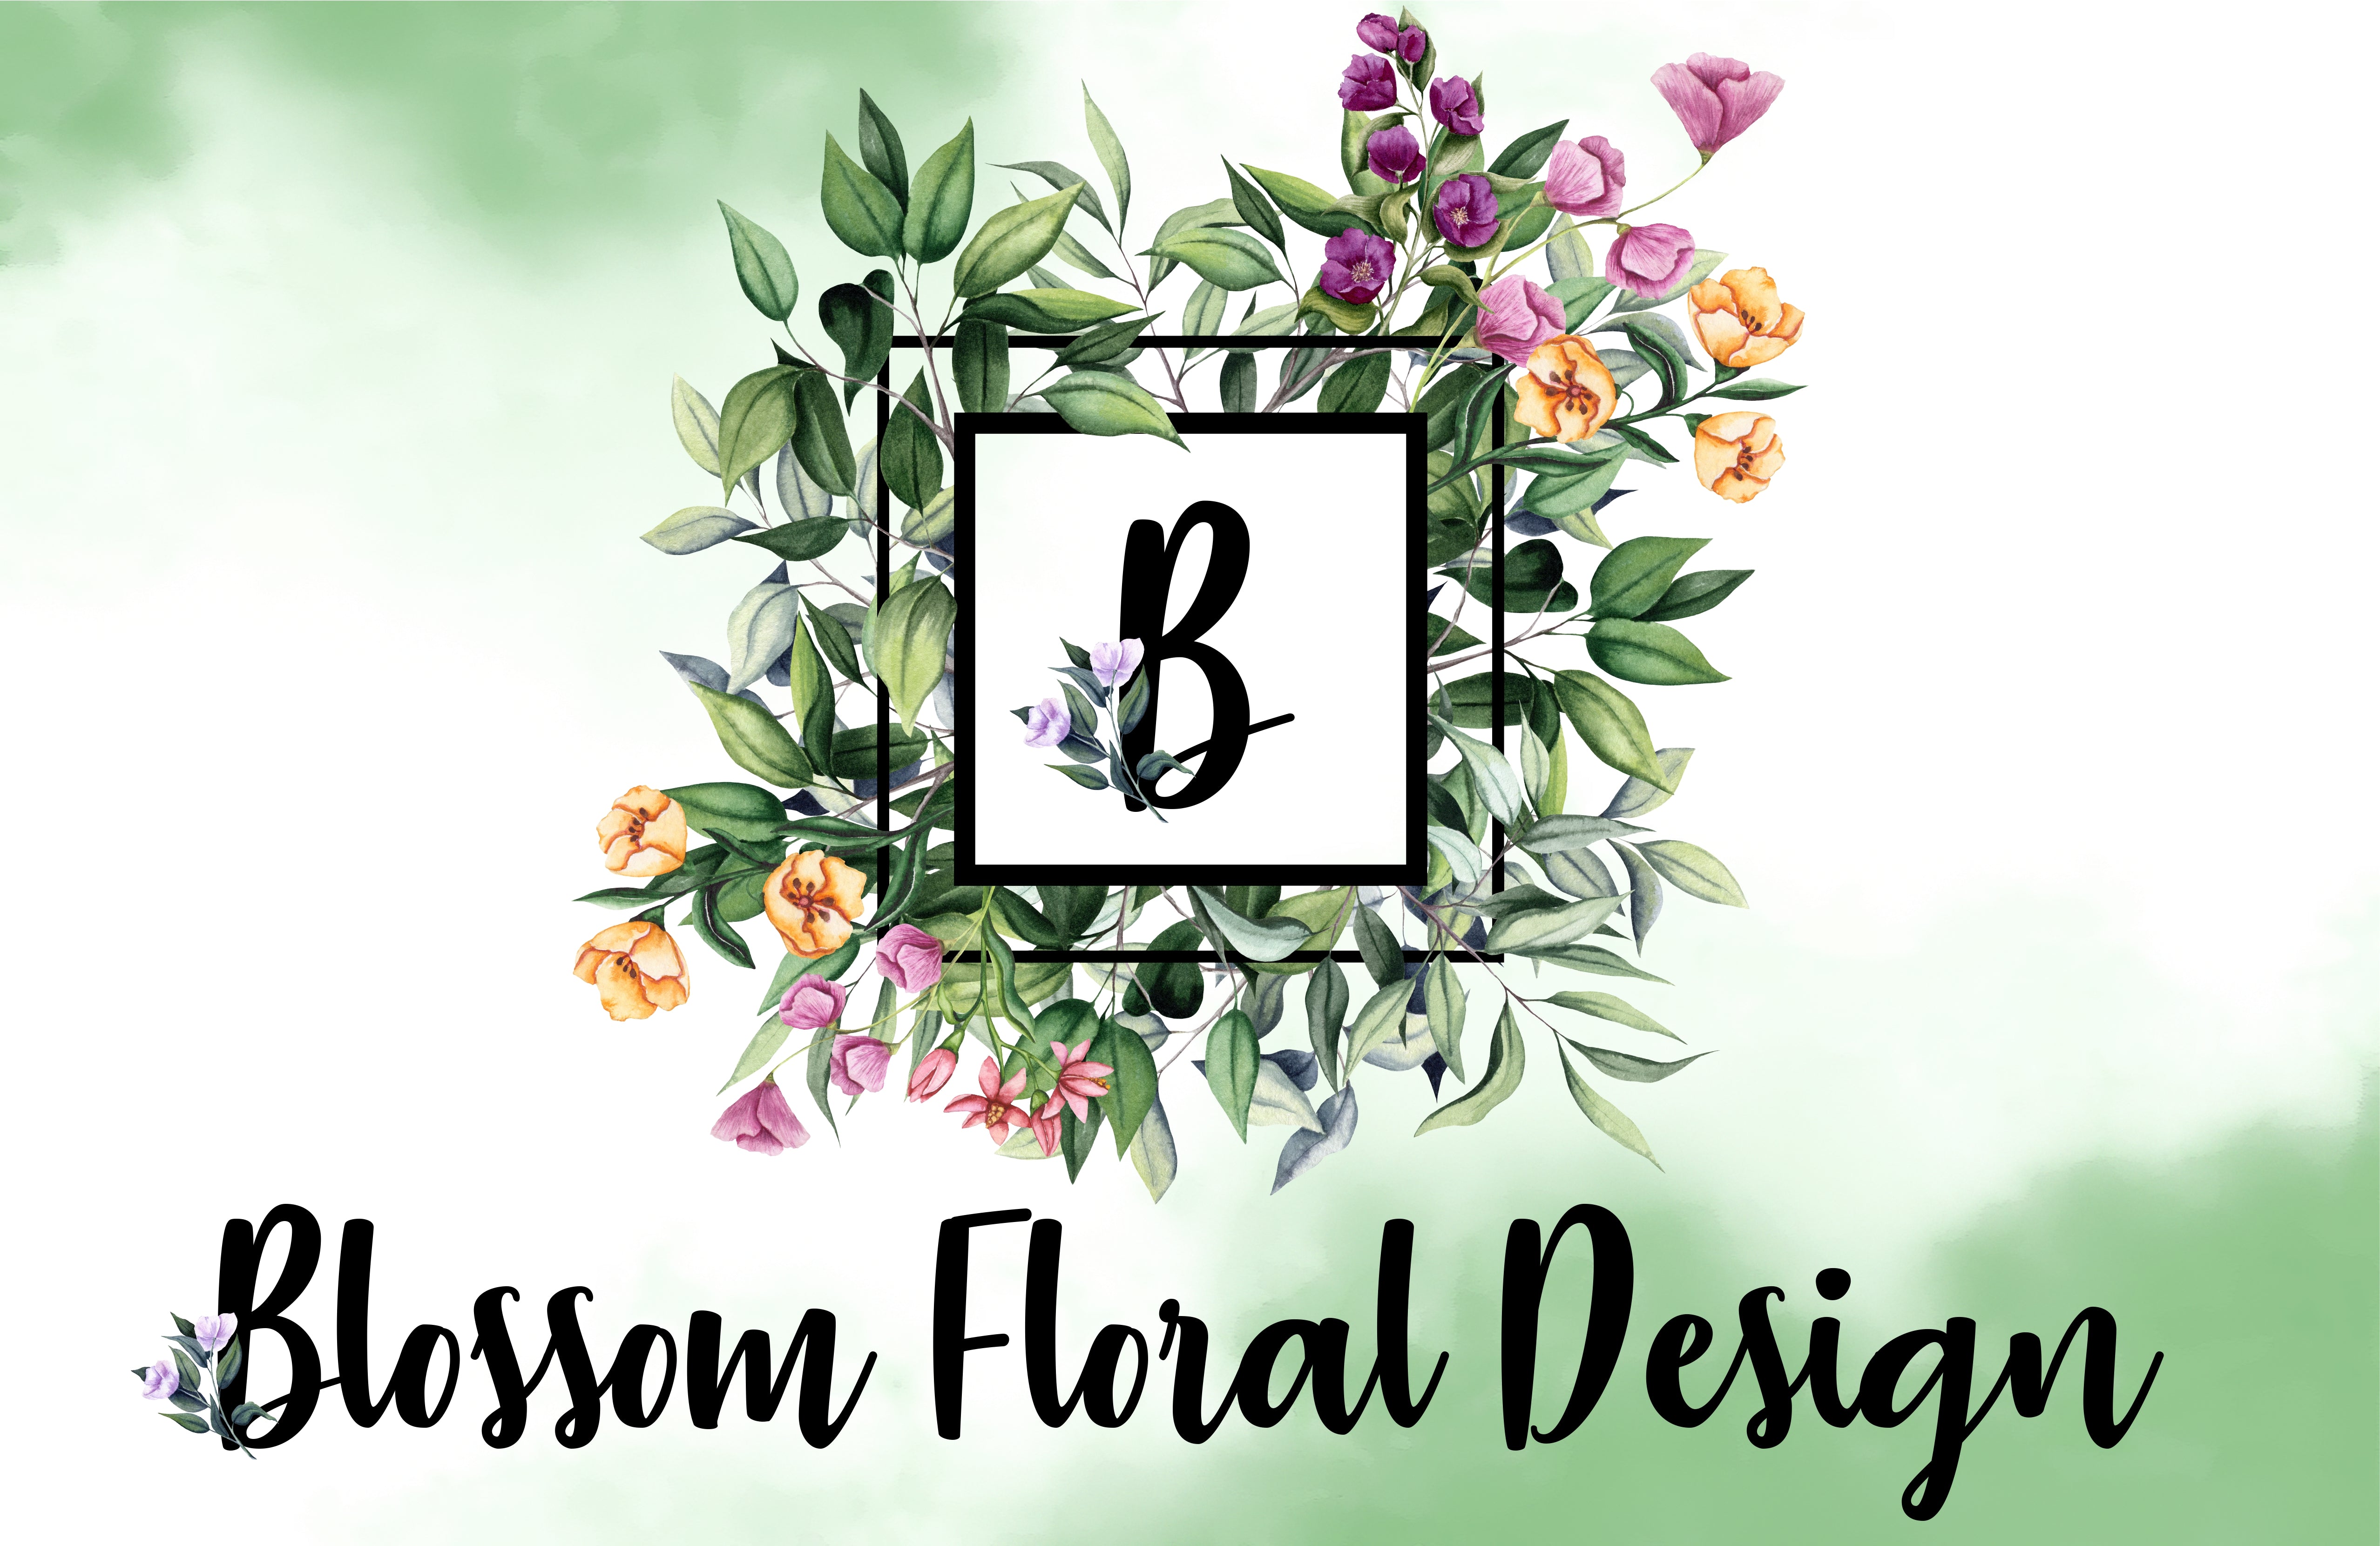 Blossom Floral Design